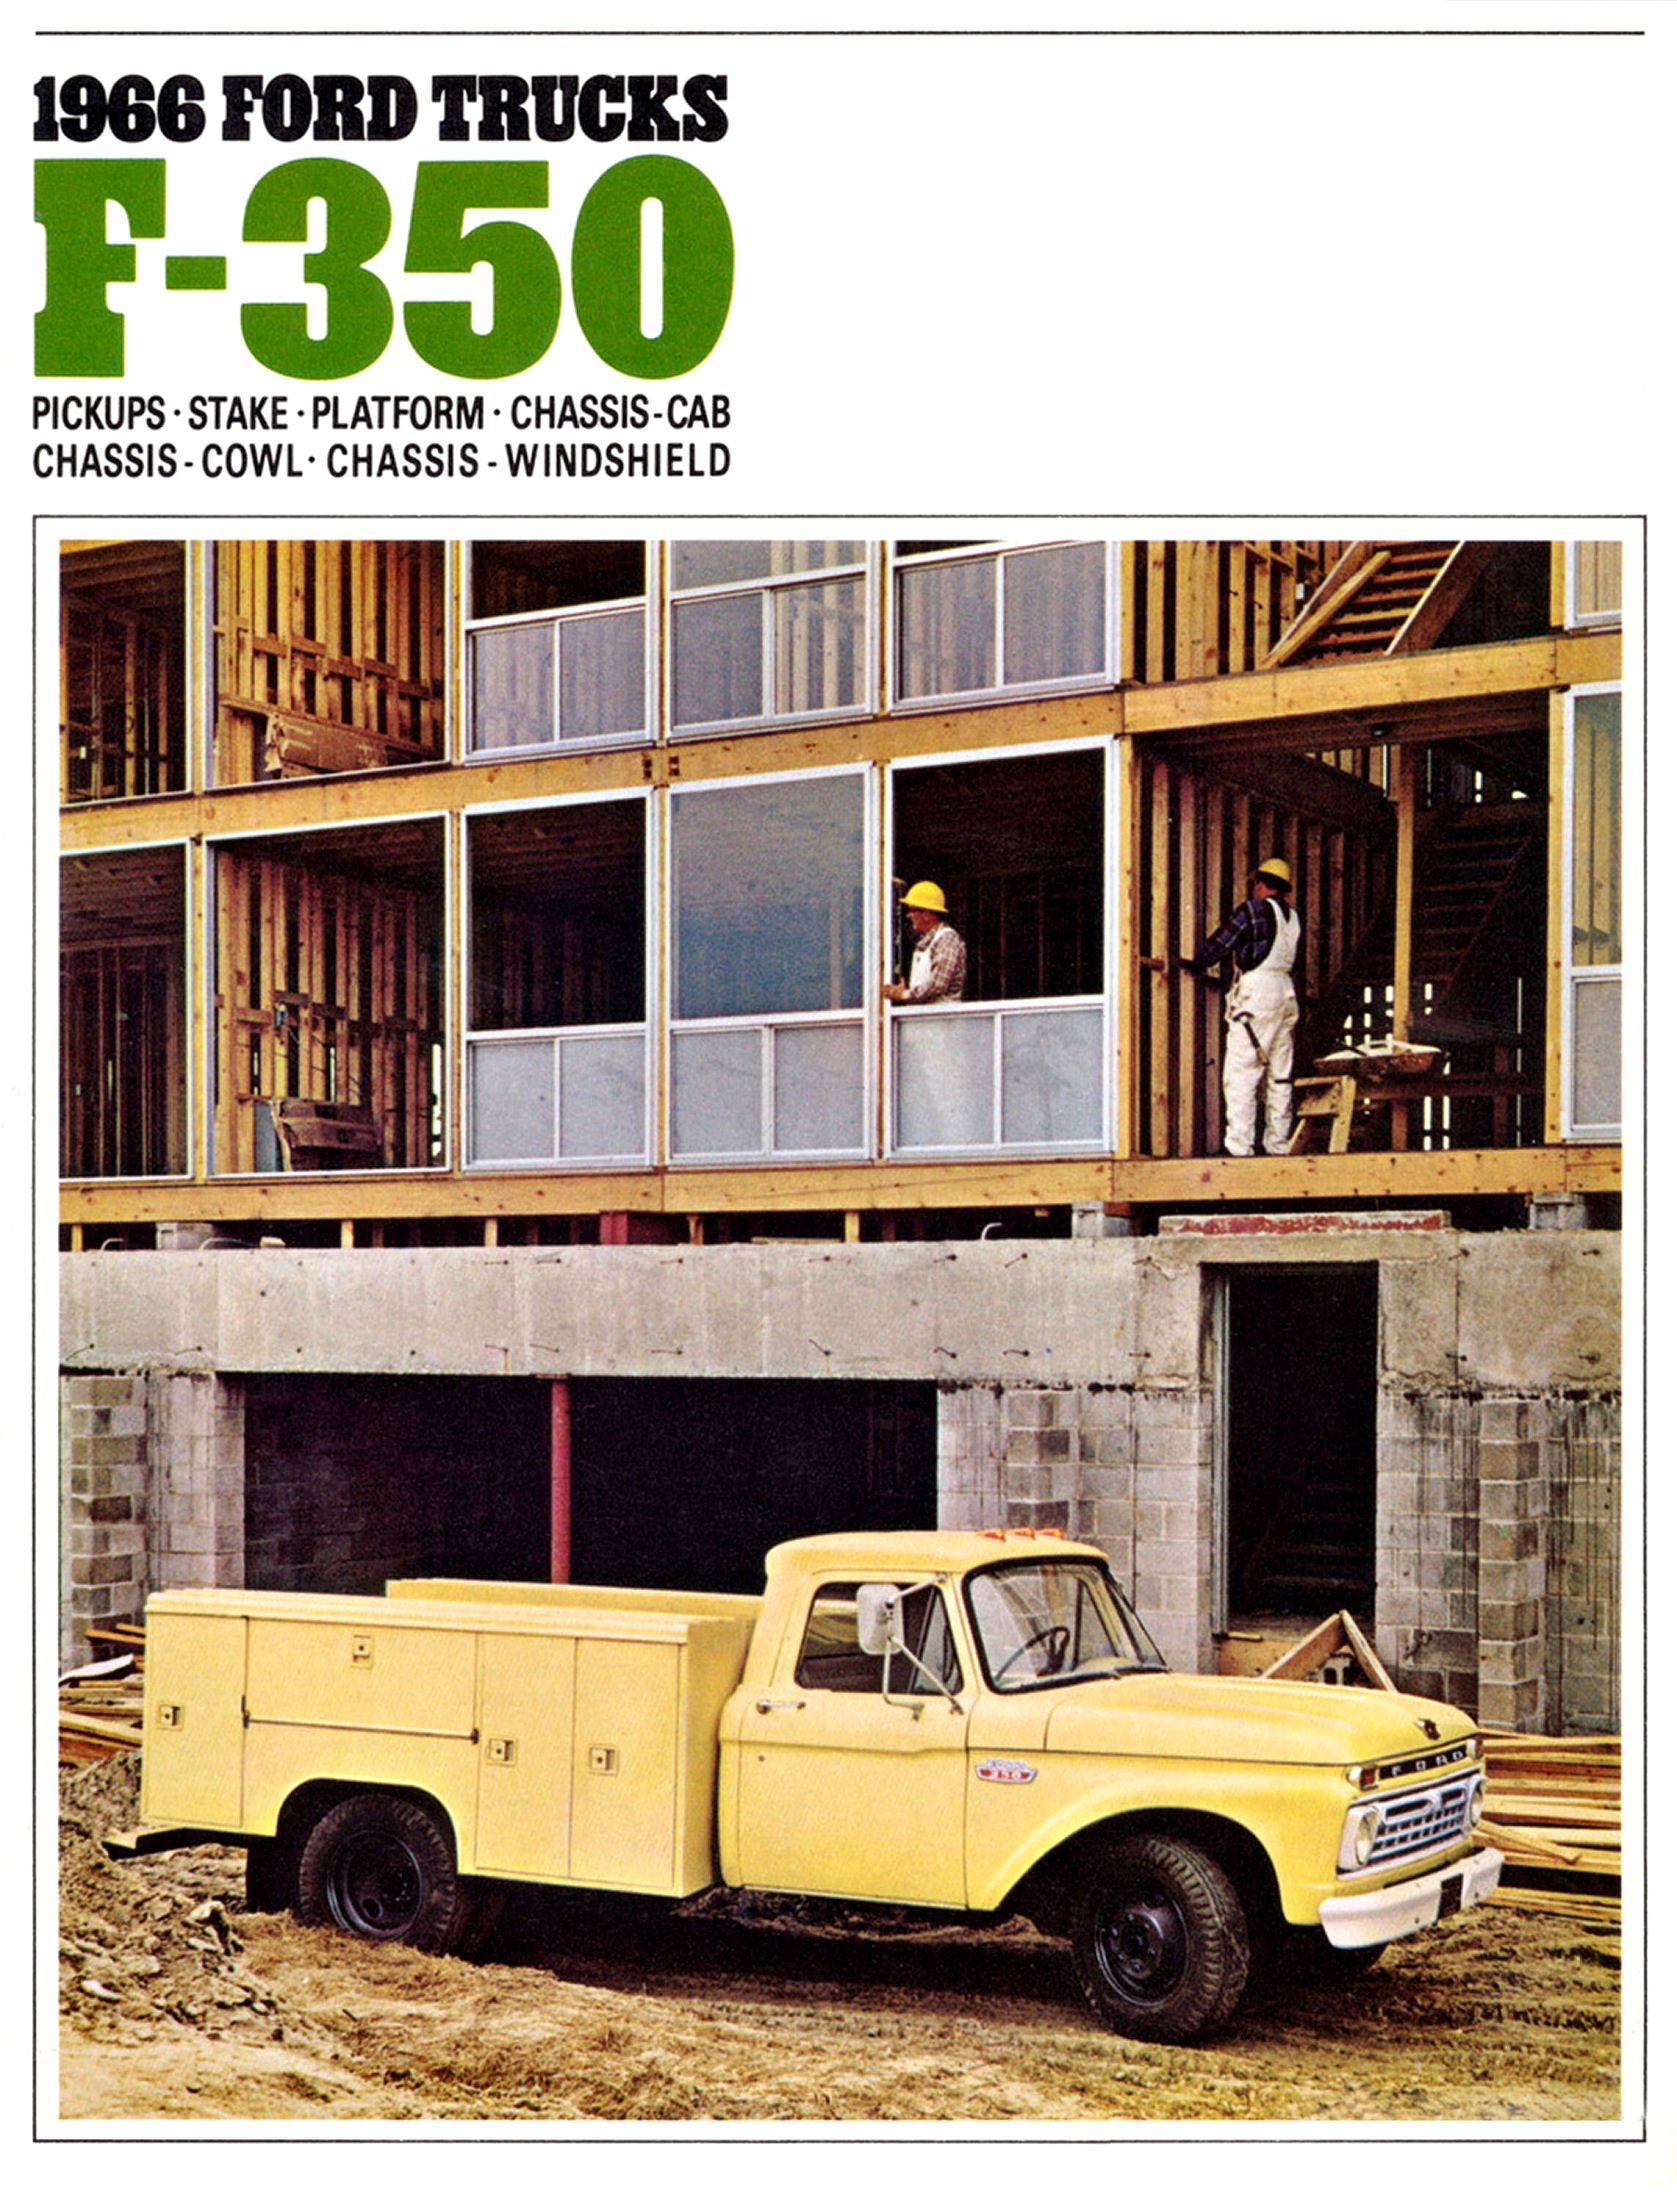 1966 Ford F-350 Truck-01